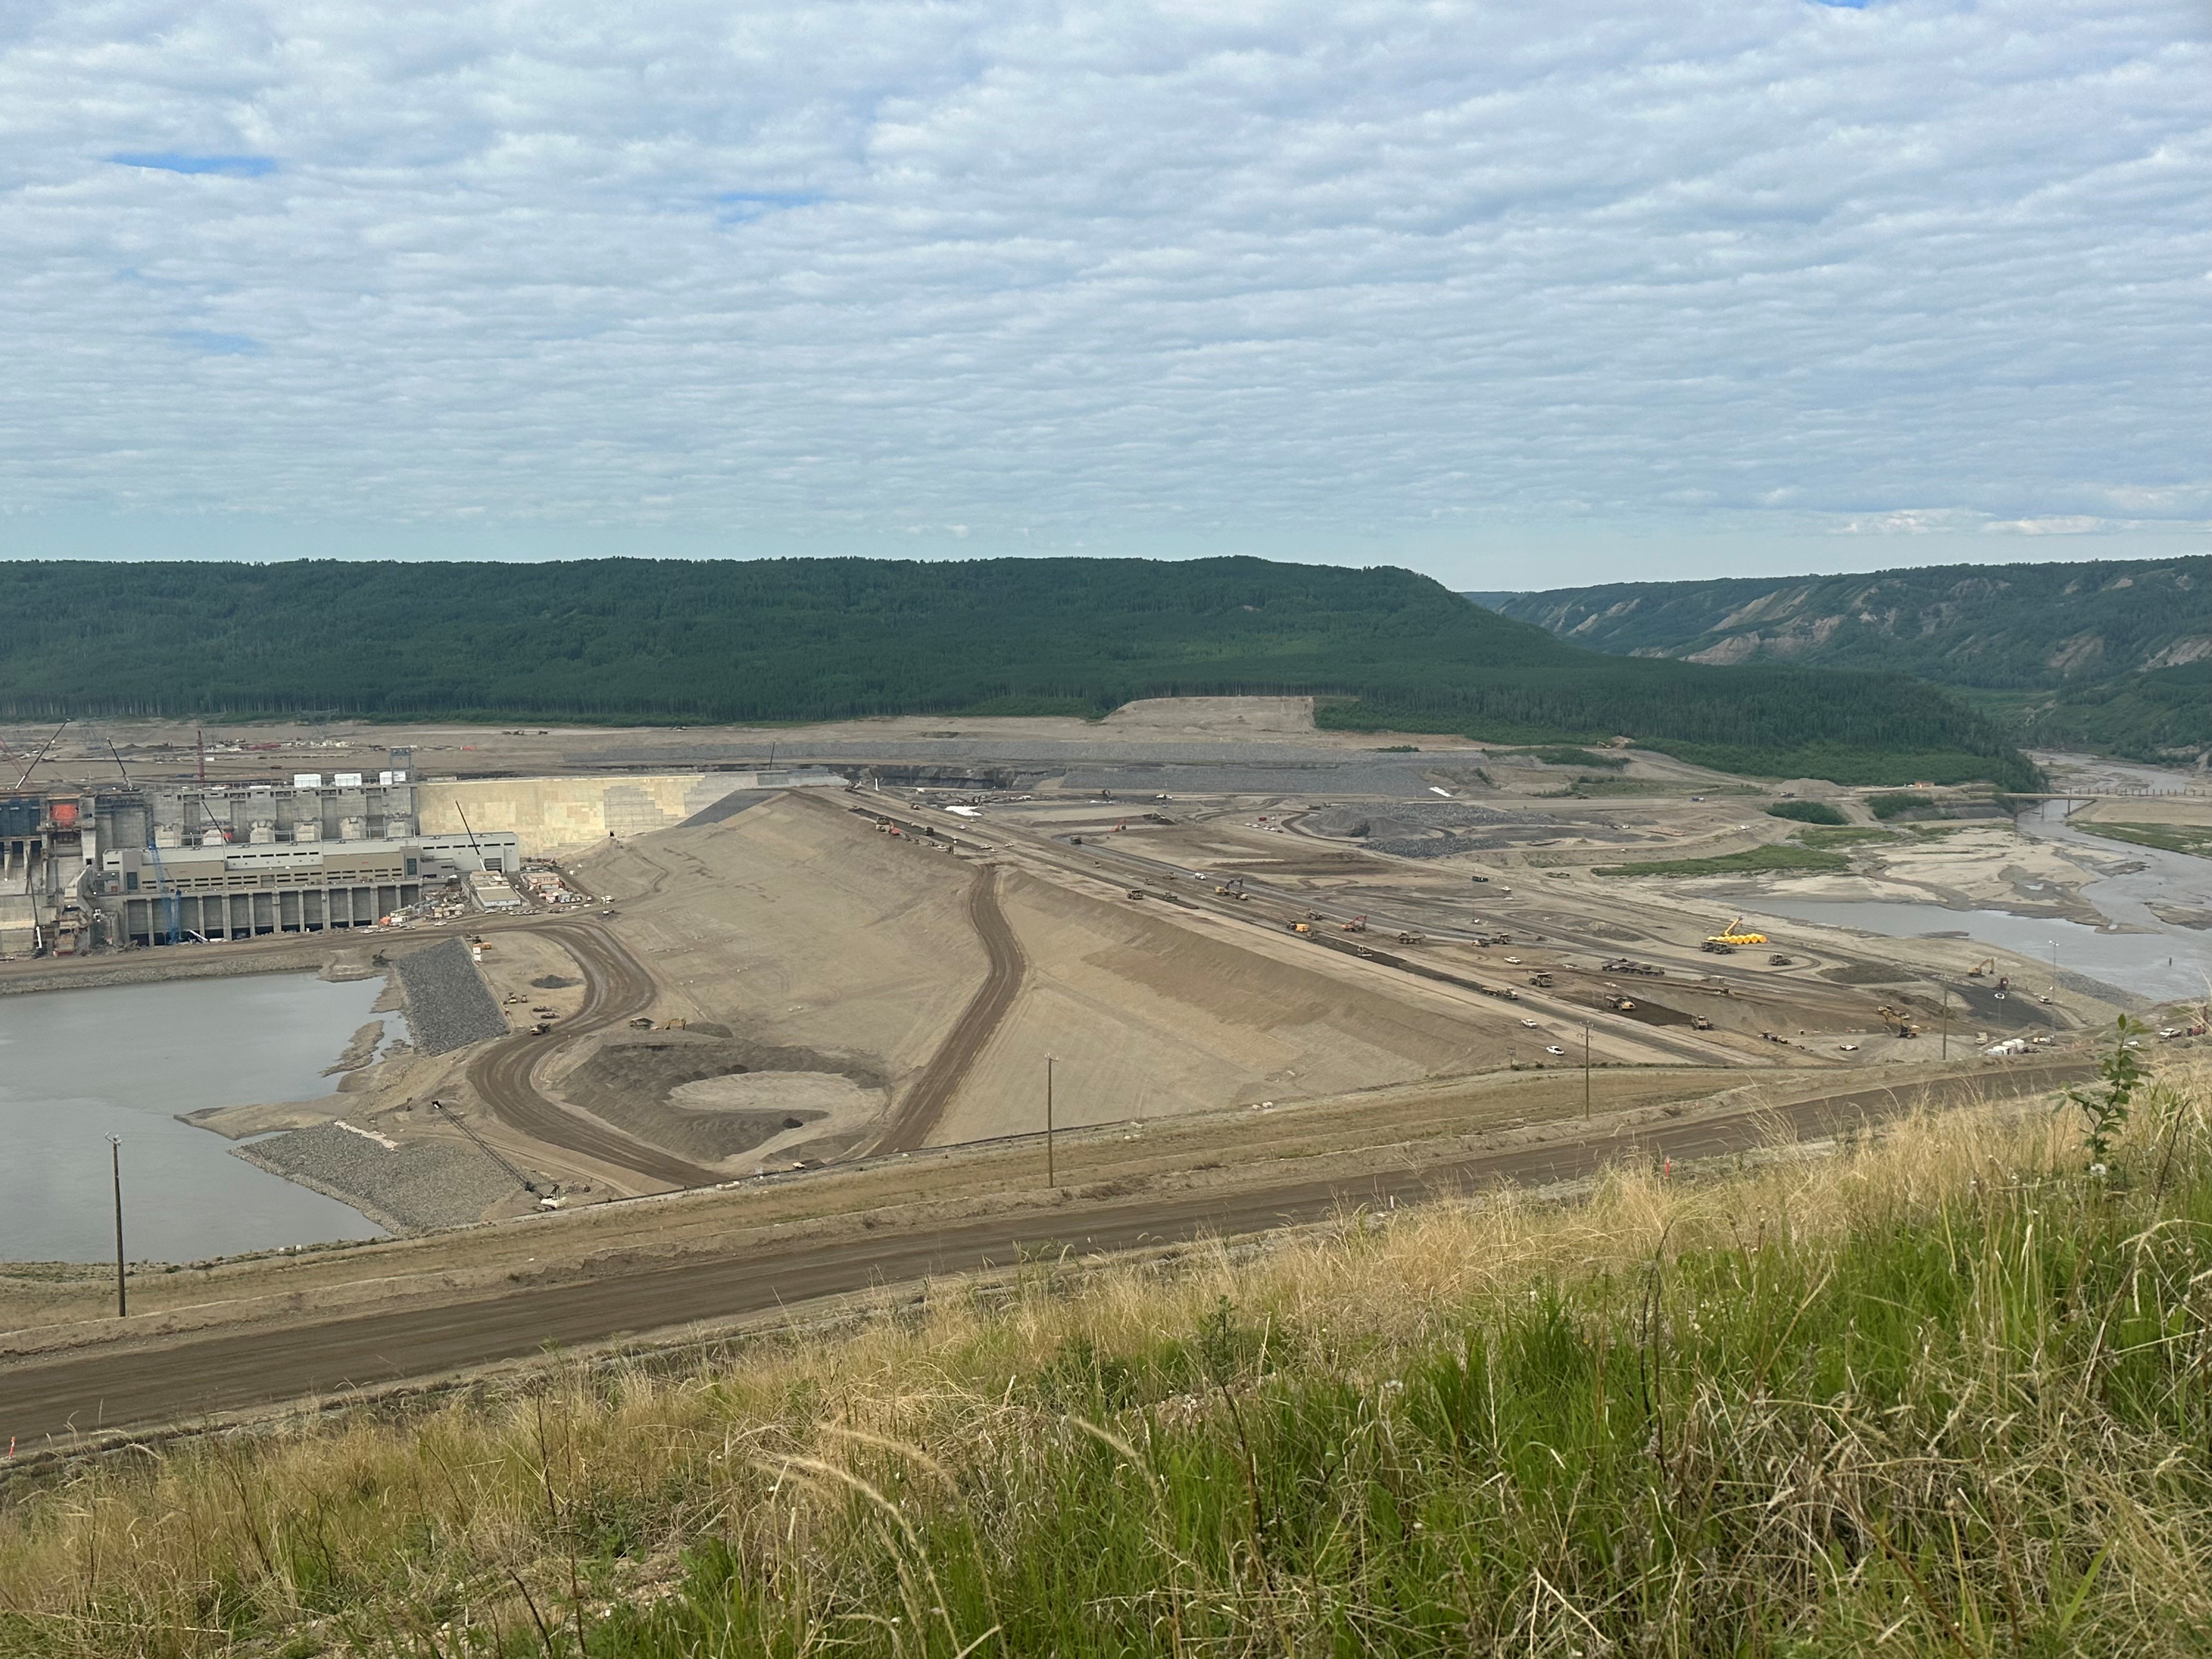 Earthfill dam